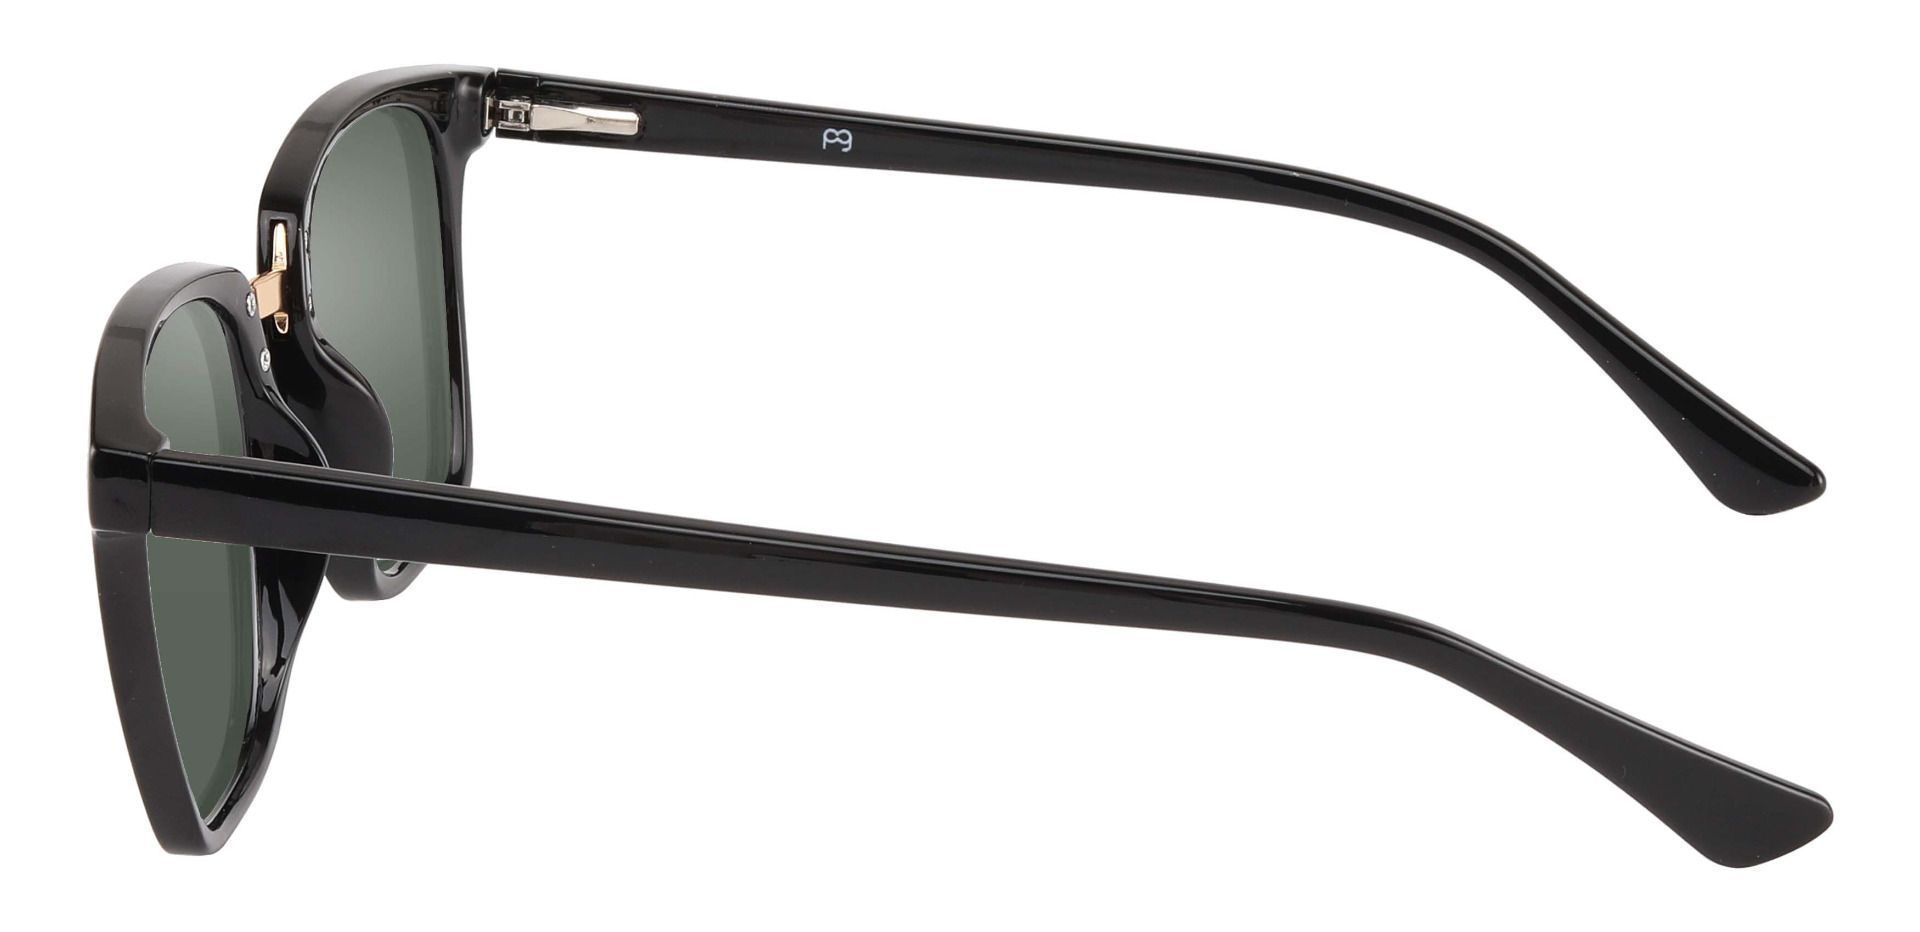 Delta Square Progressive Sunglasses - Black Frame With Green Lenses